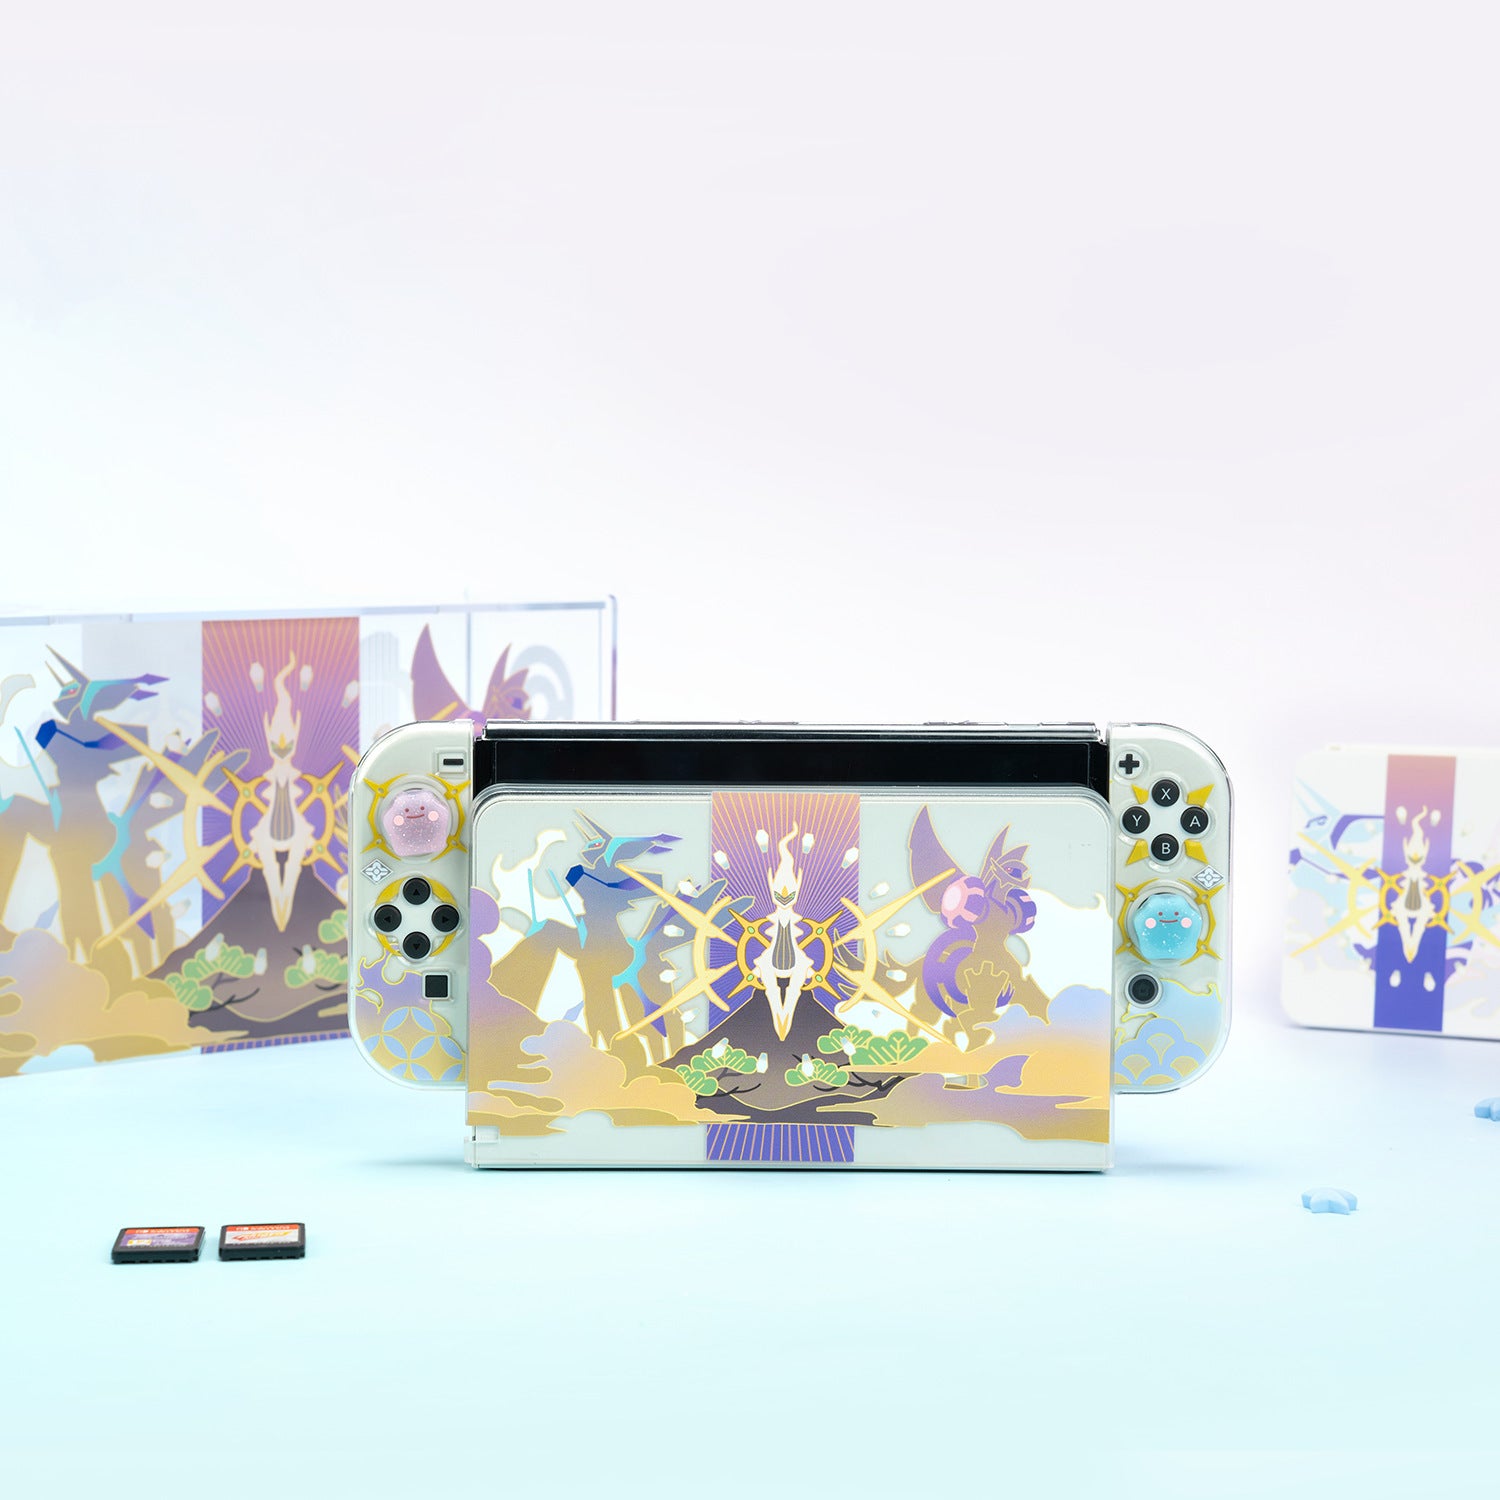 Pokémon Legends: Arceus OLED Nintendo Switch Gameplay 